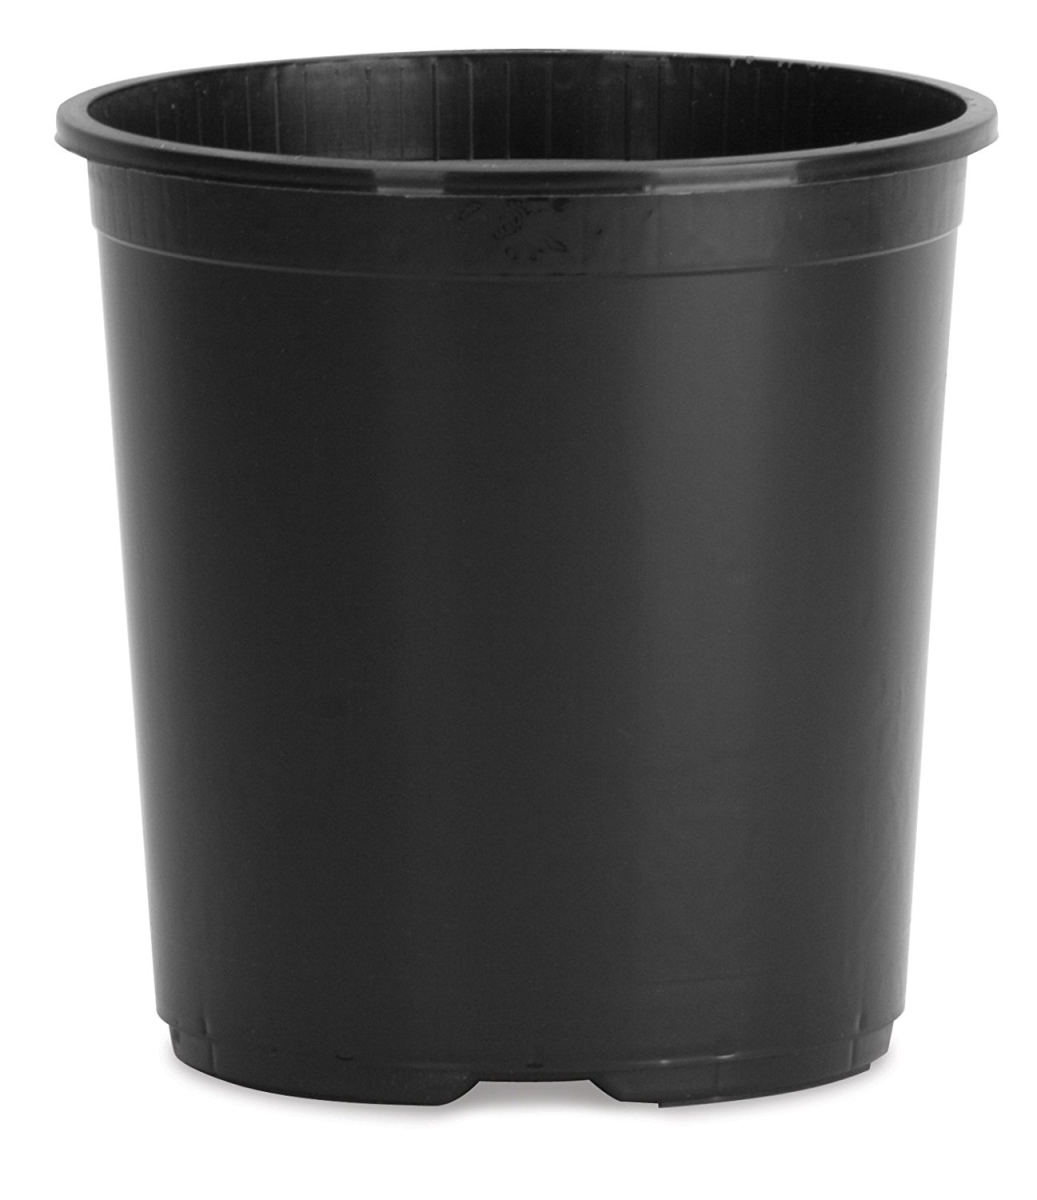 Nsr015g0g18 Nursery Planter Container - Black, 15 Gal